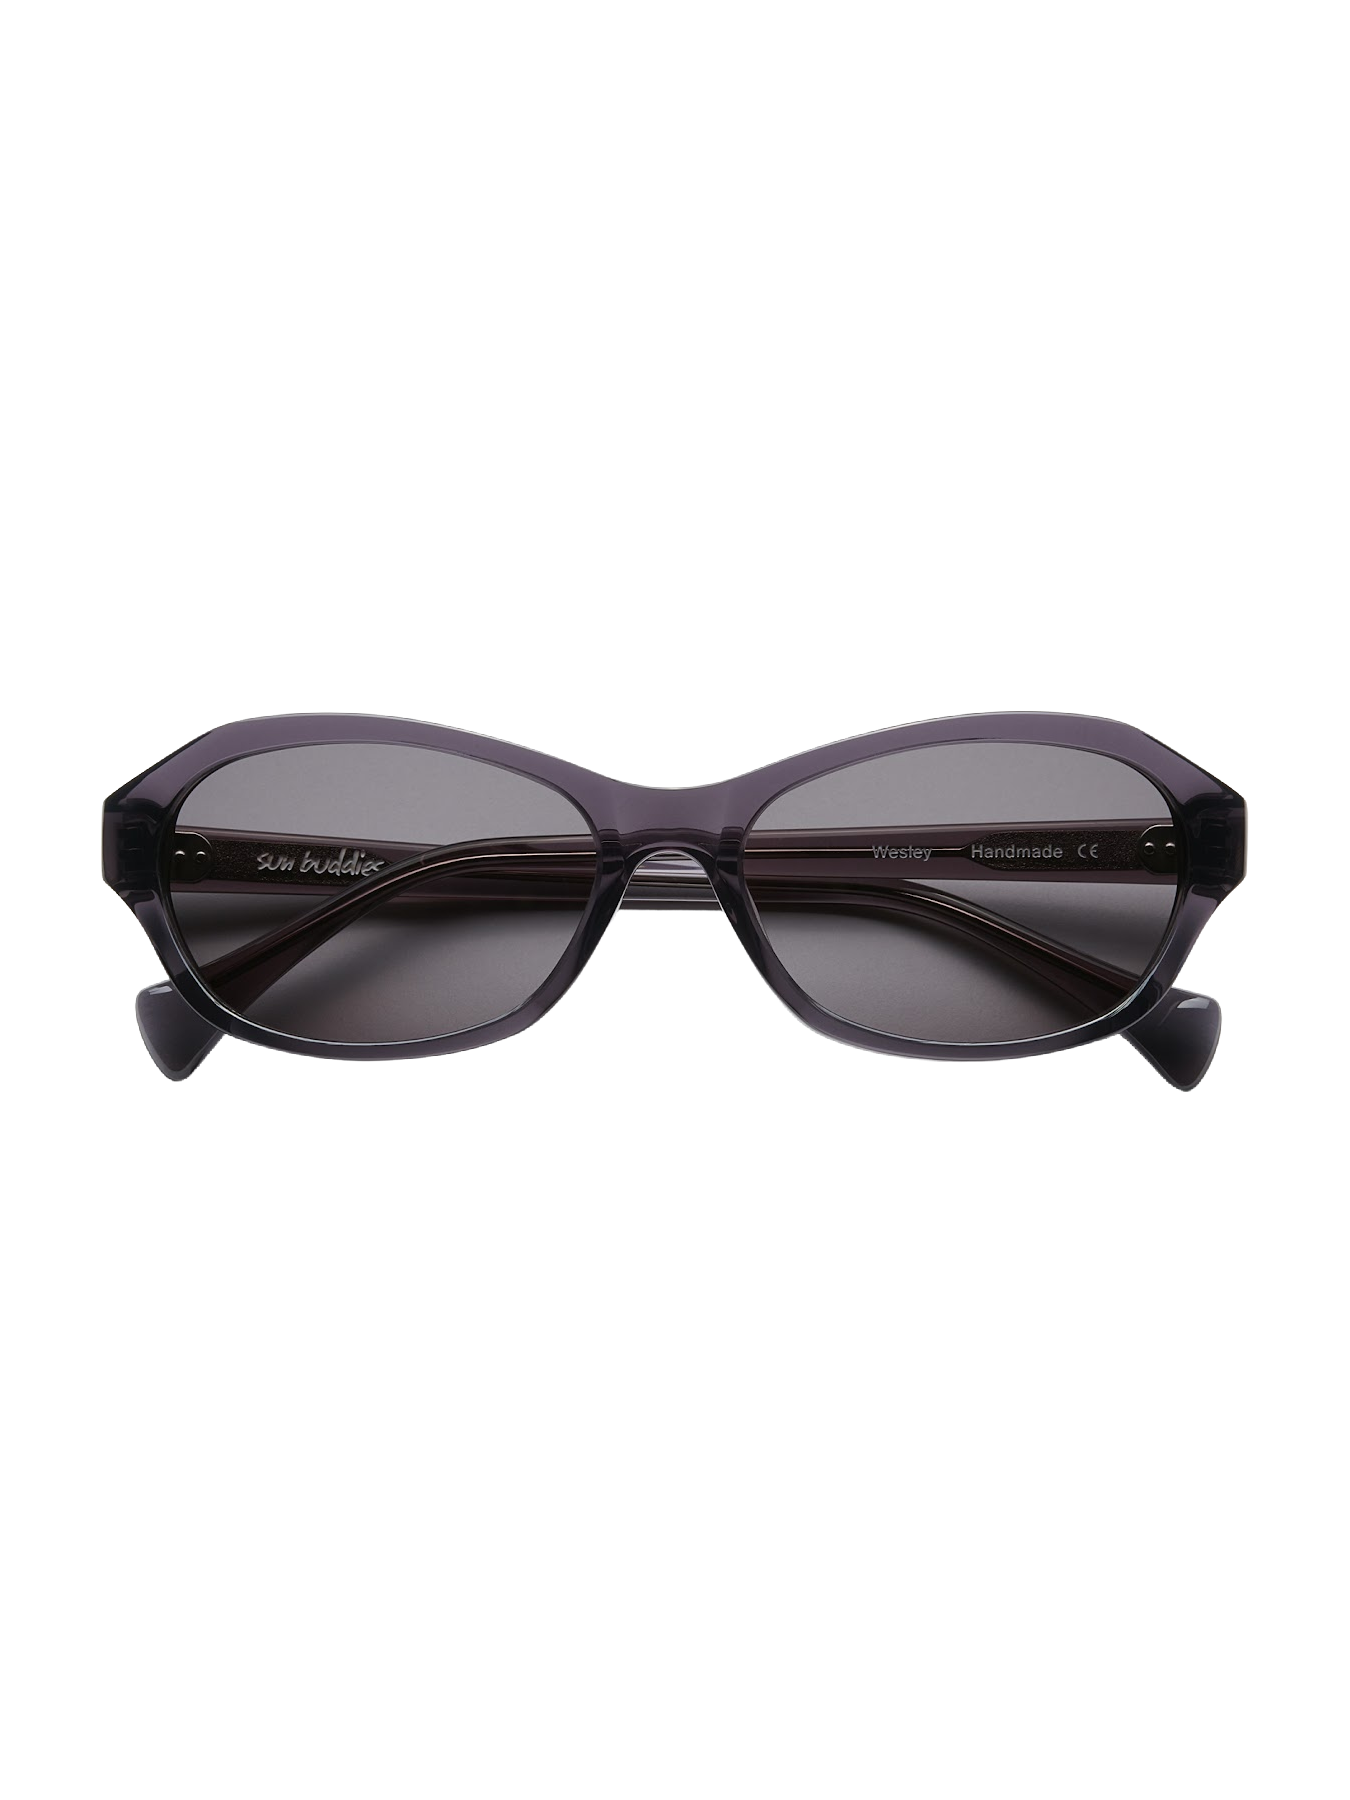 Sun Buddies Wesley Sunglasses in Transparent Grey